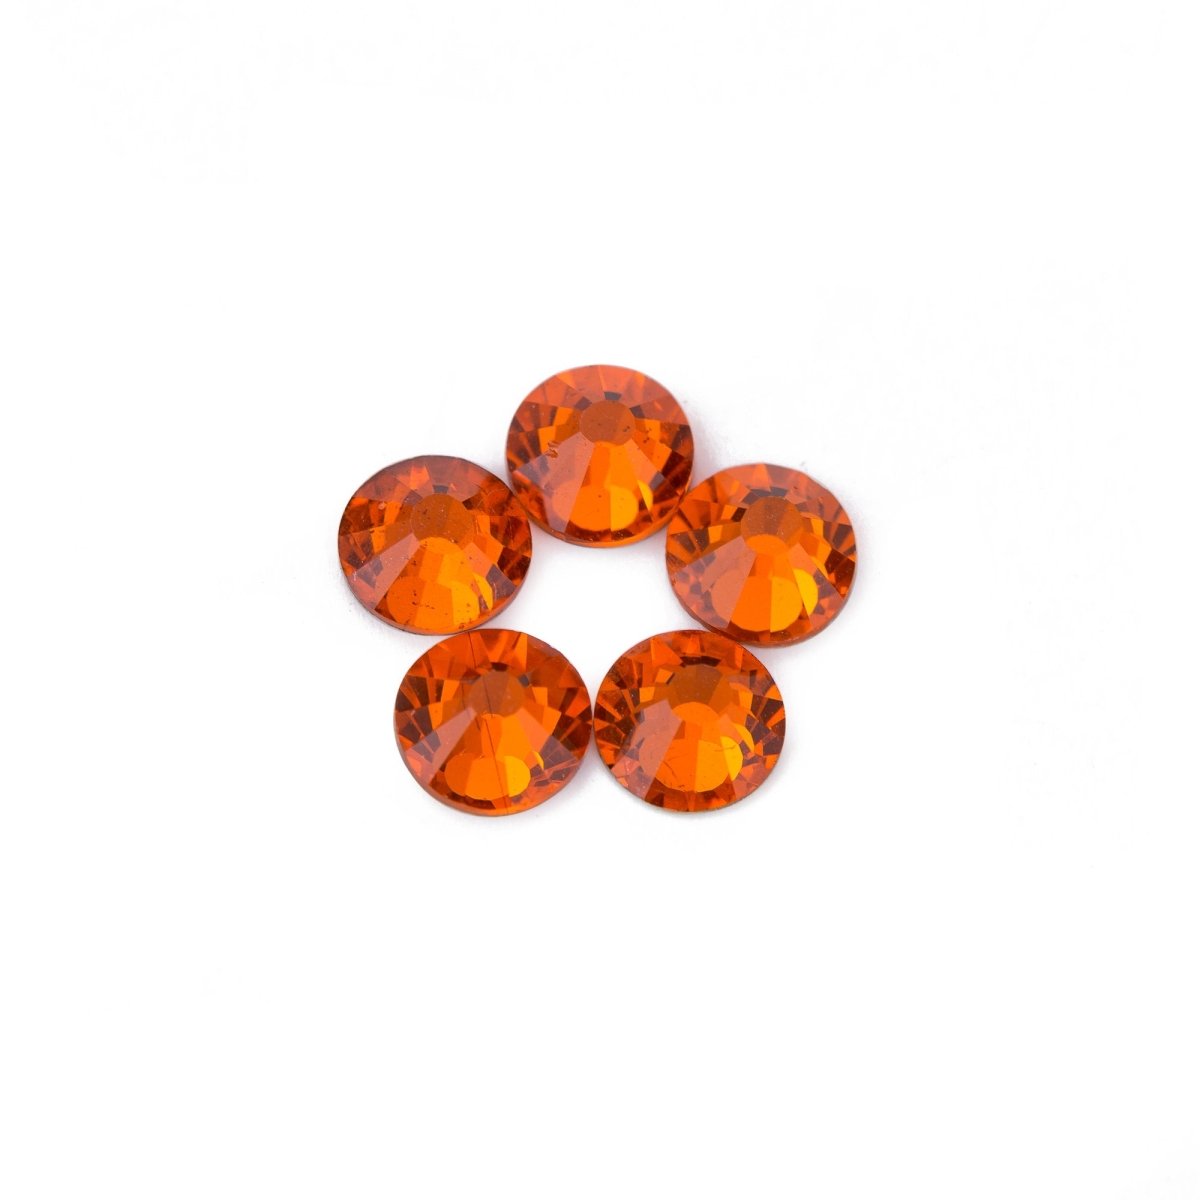 288 pcs High Quality Crystal Dark Orange Hyacinth Rhinestones Loose Crystal flat back No Hot Fix Glass Beads Size ss 30 / ss 34 - DLUXCA